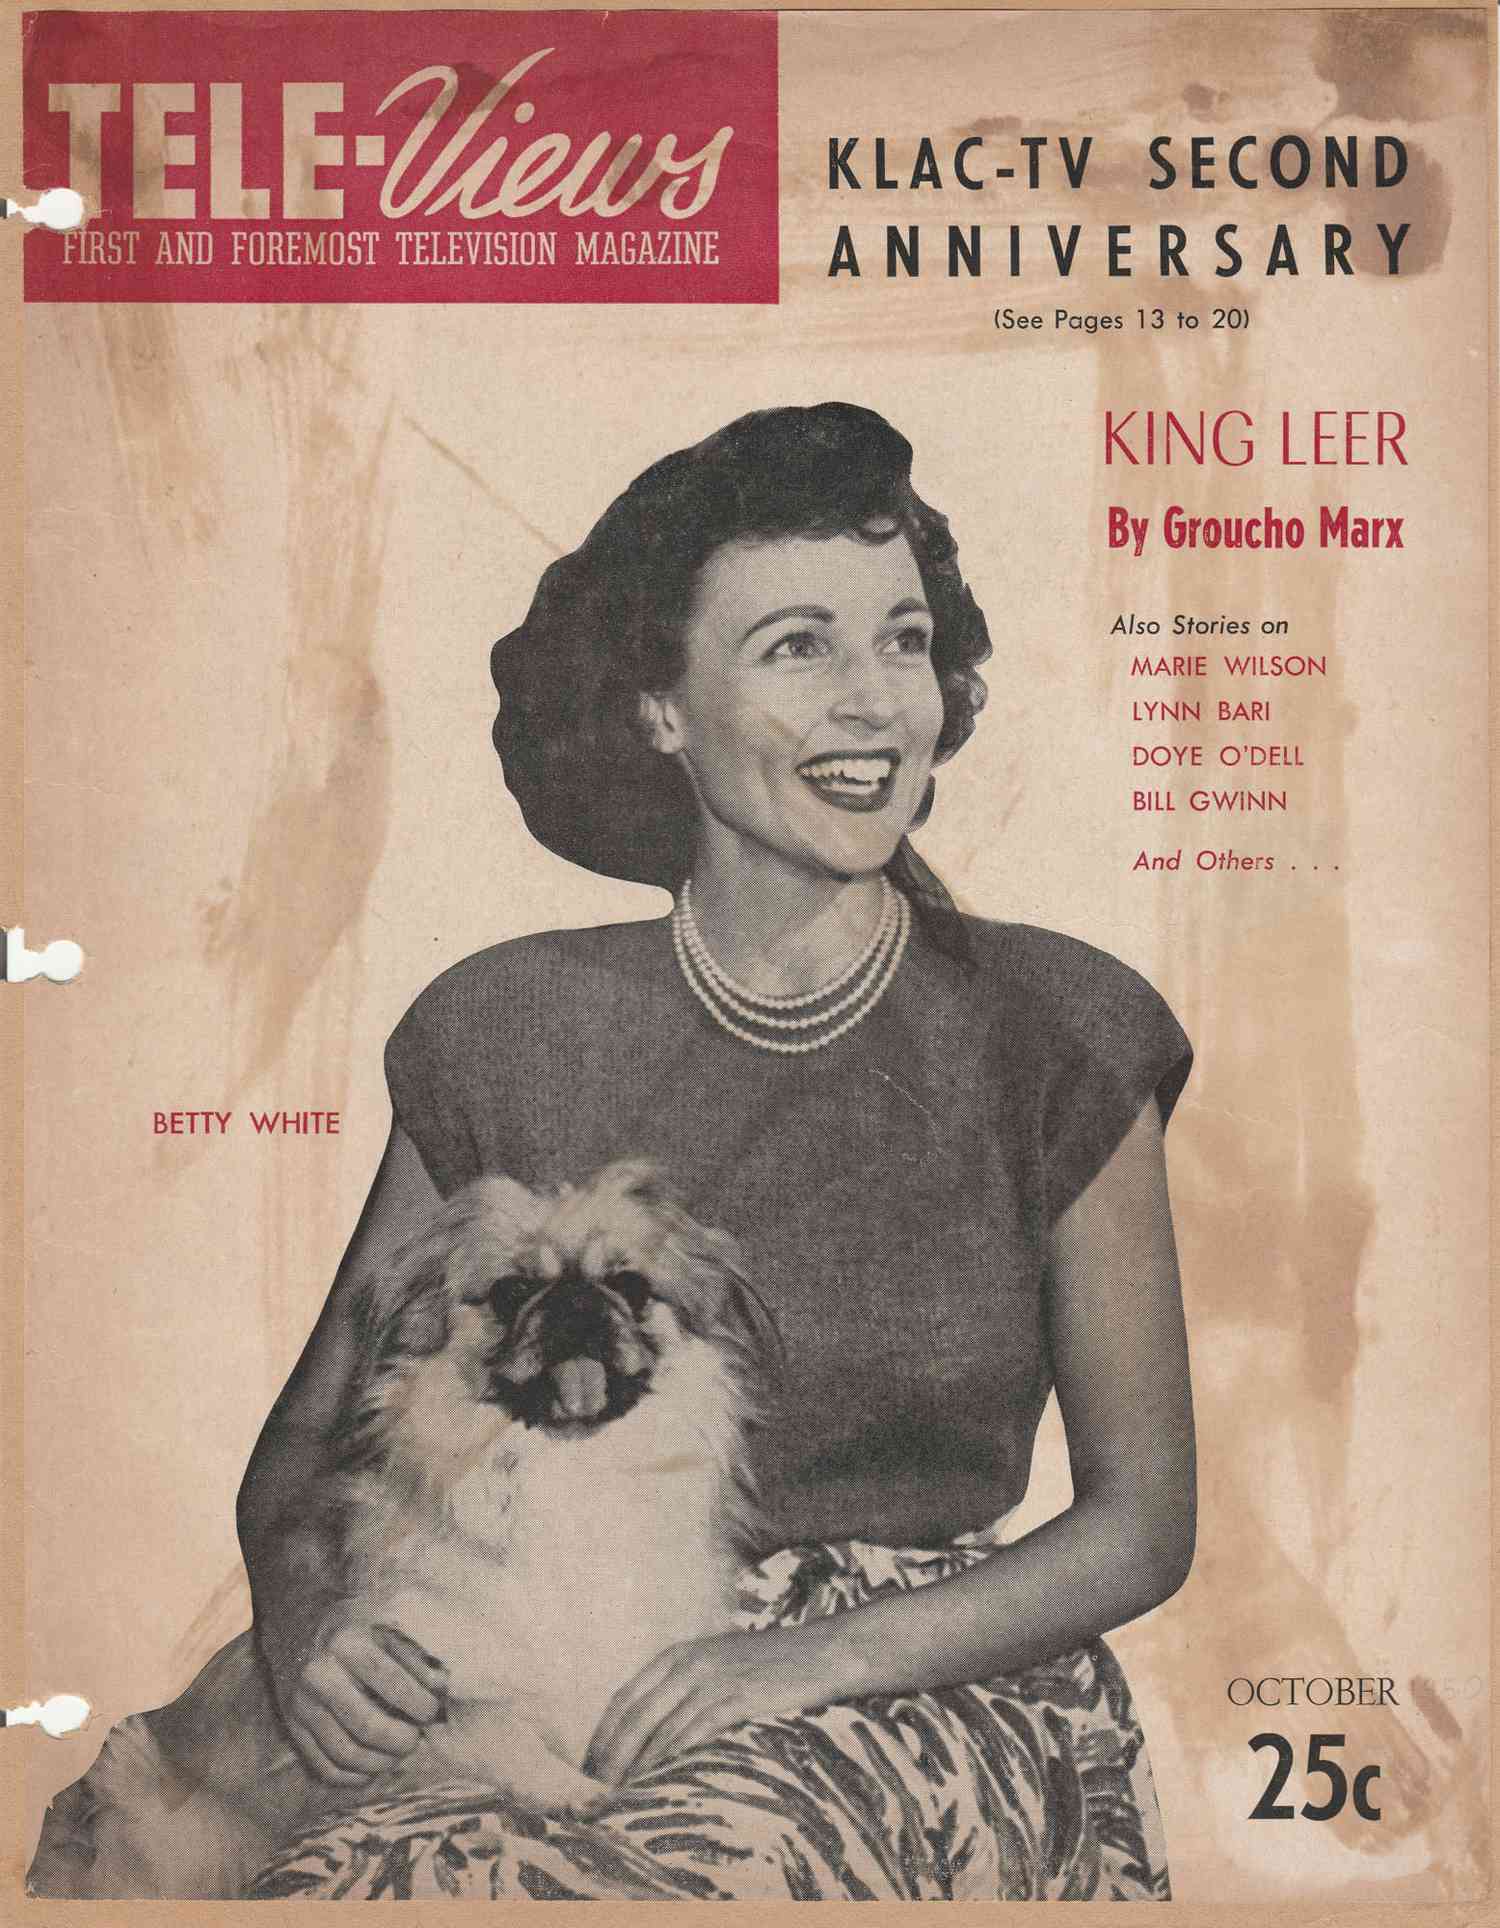 Betty White on the cover of Tele-Views magazine, circa 1950